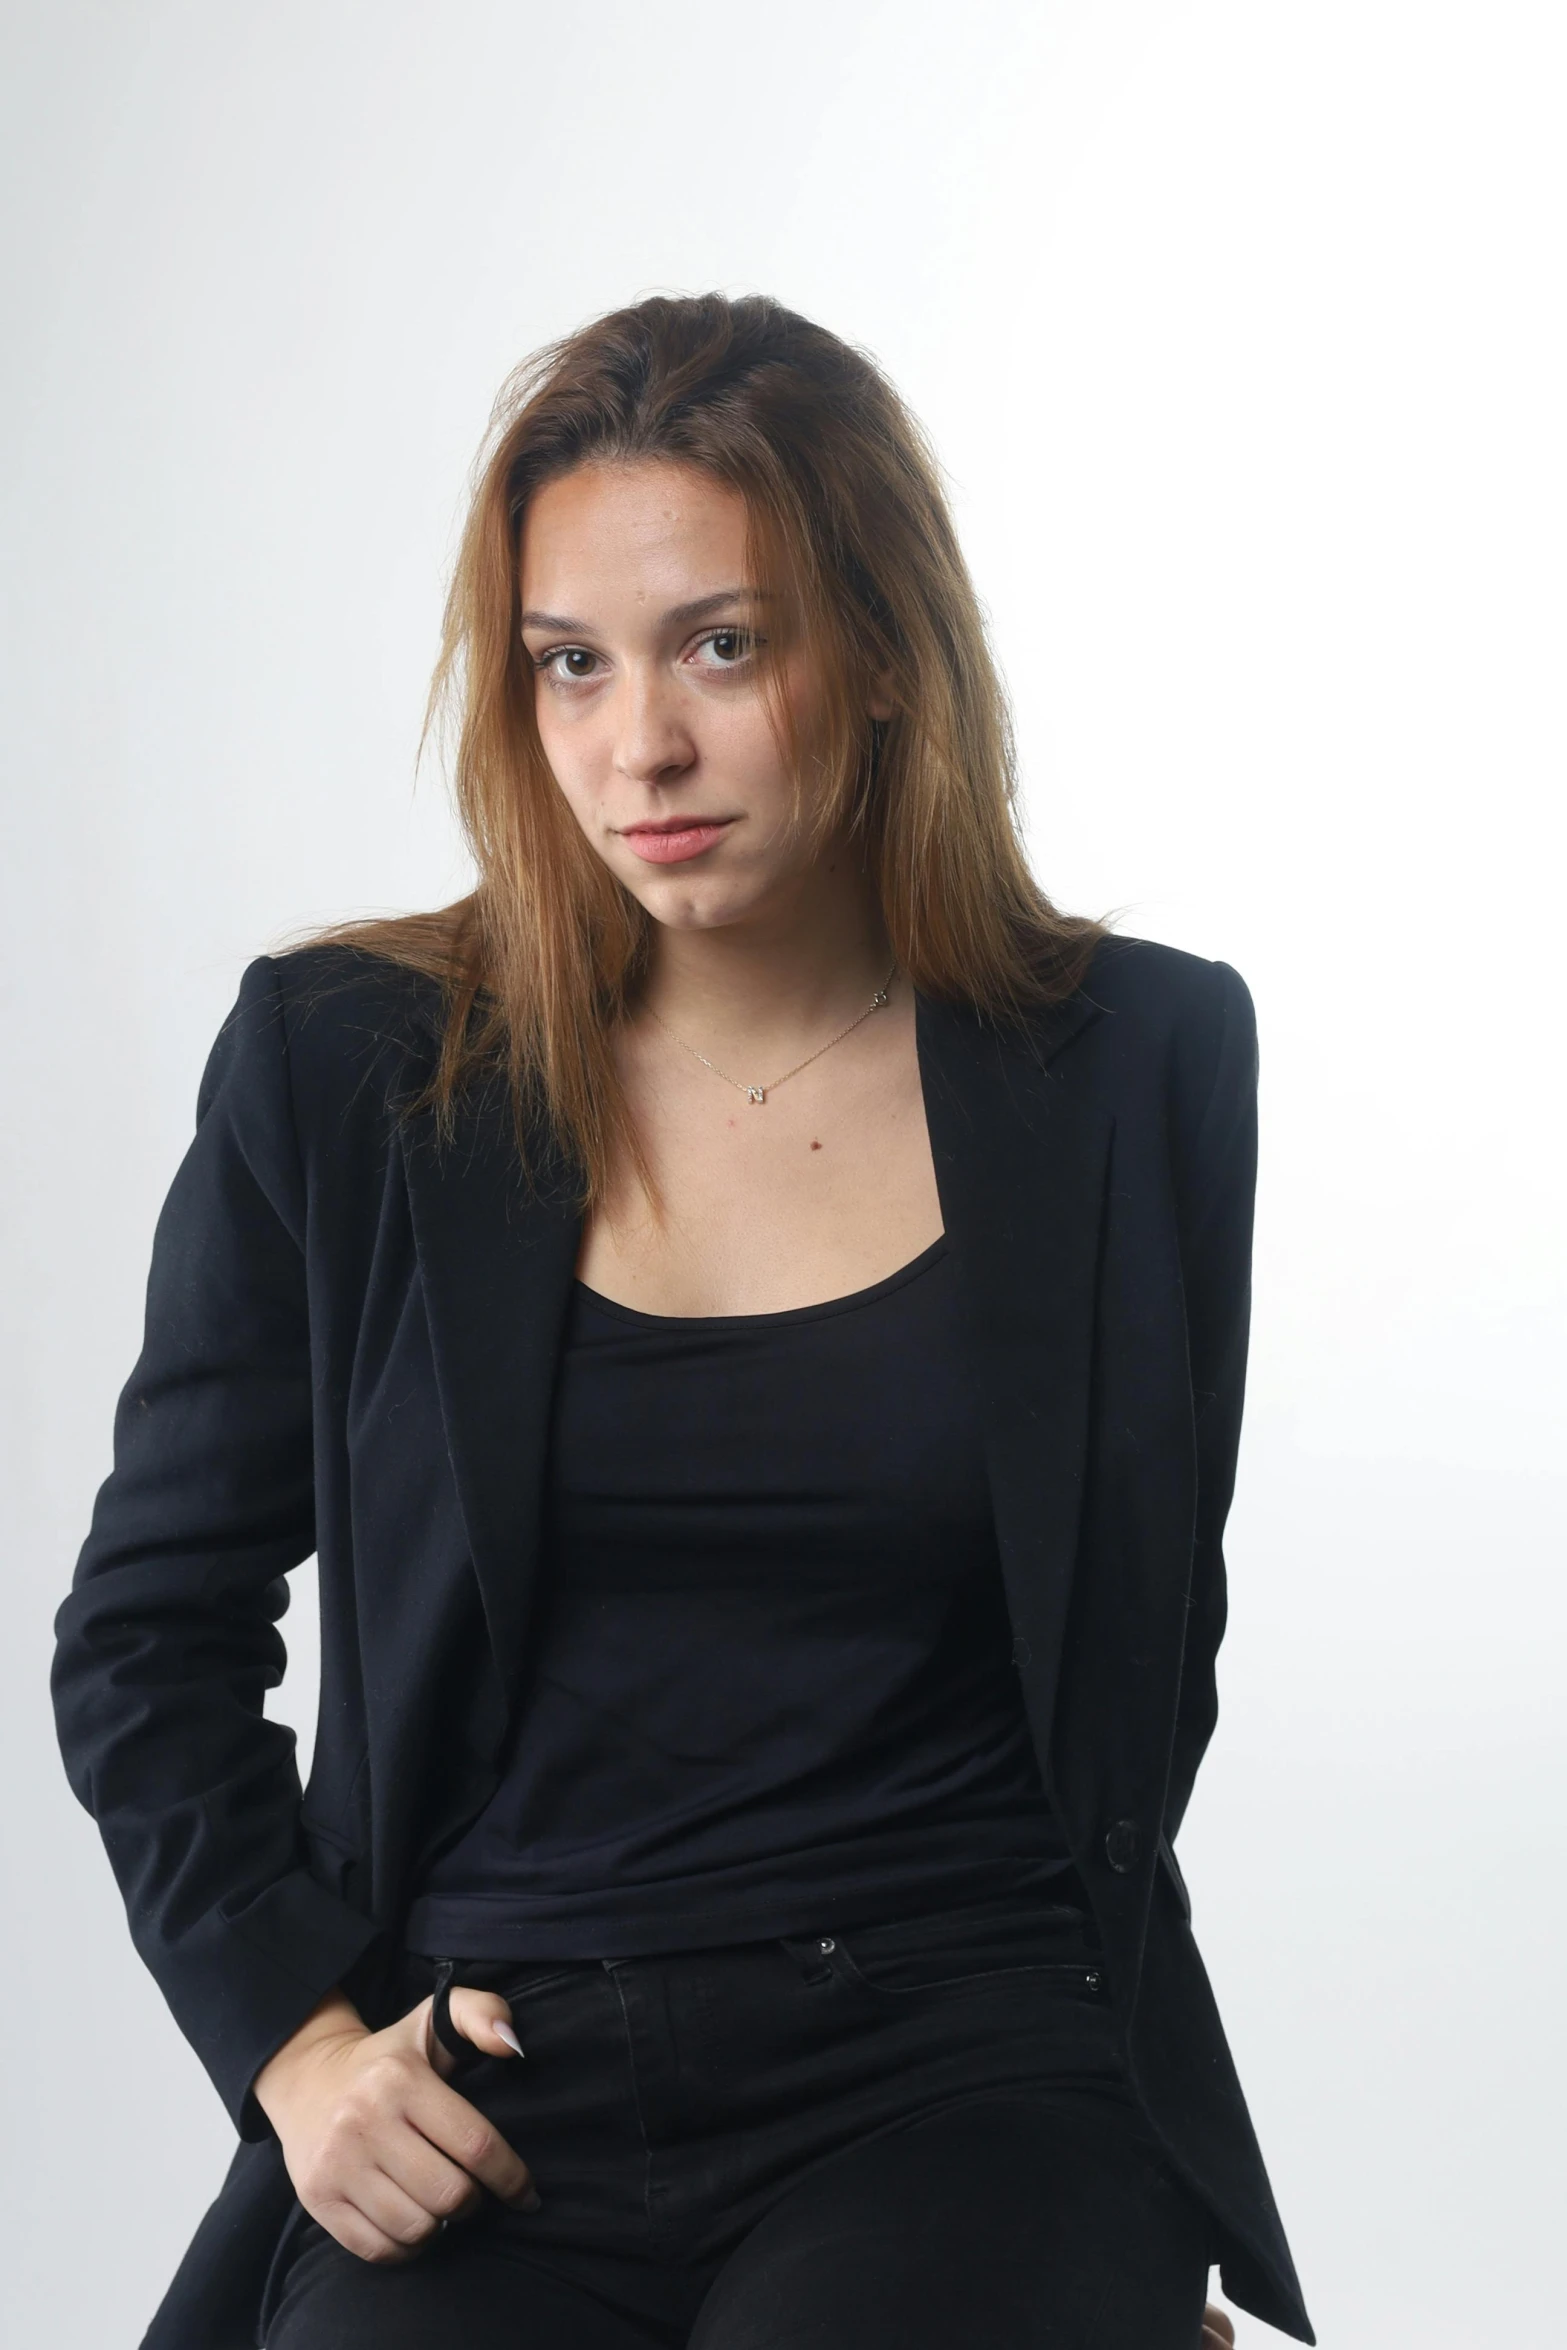 woman in black suit sitting on stool, portrait